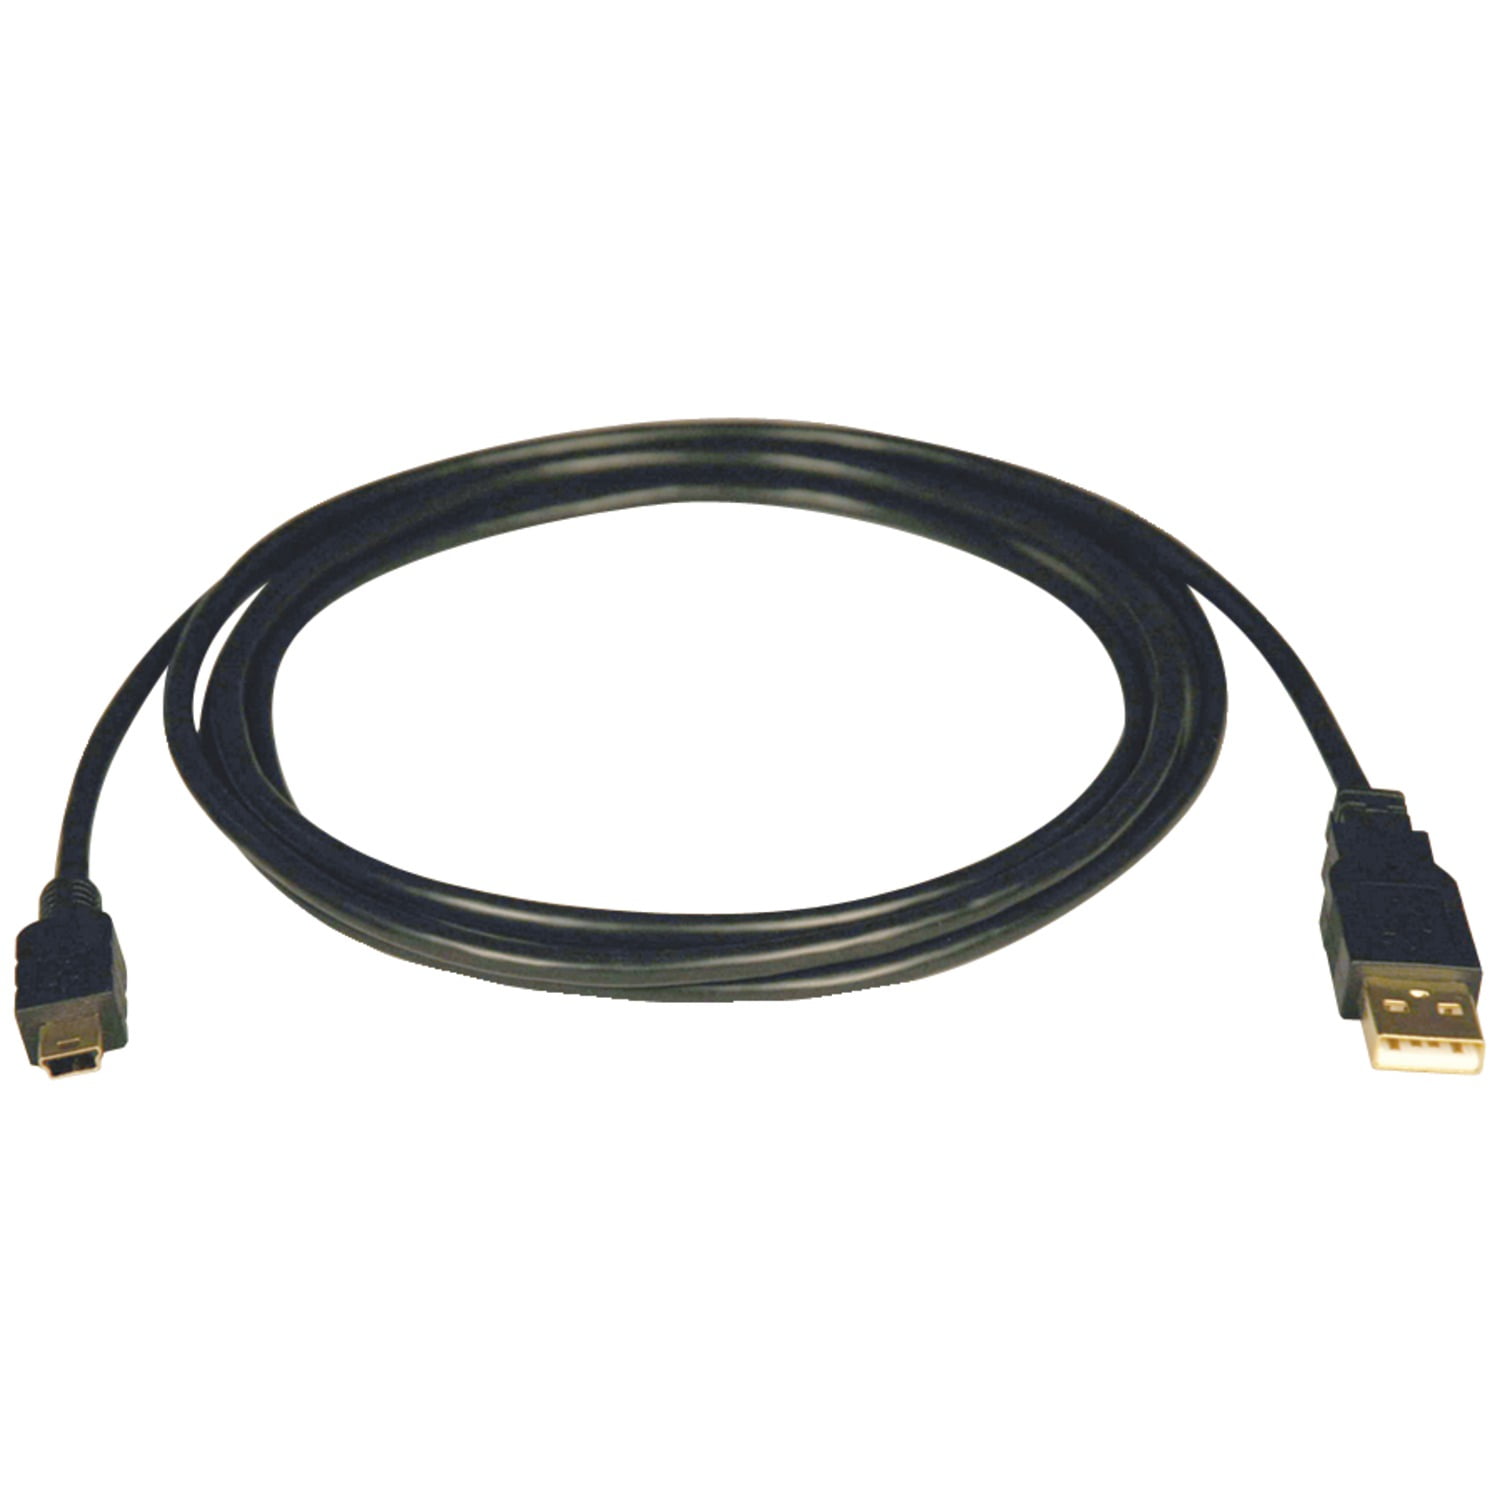 USB A TO MINI USB B 5 pieces 1M BLACK TE CONNECTIVITY / AMP 1496476-1 USB CABLE